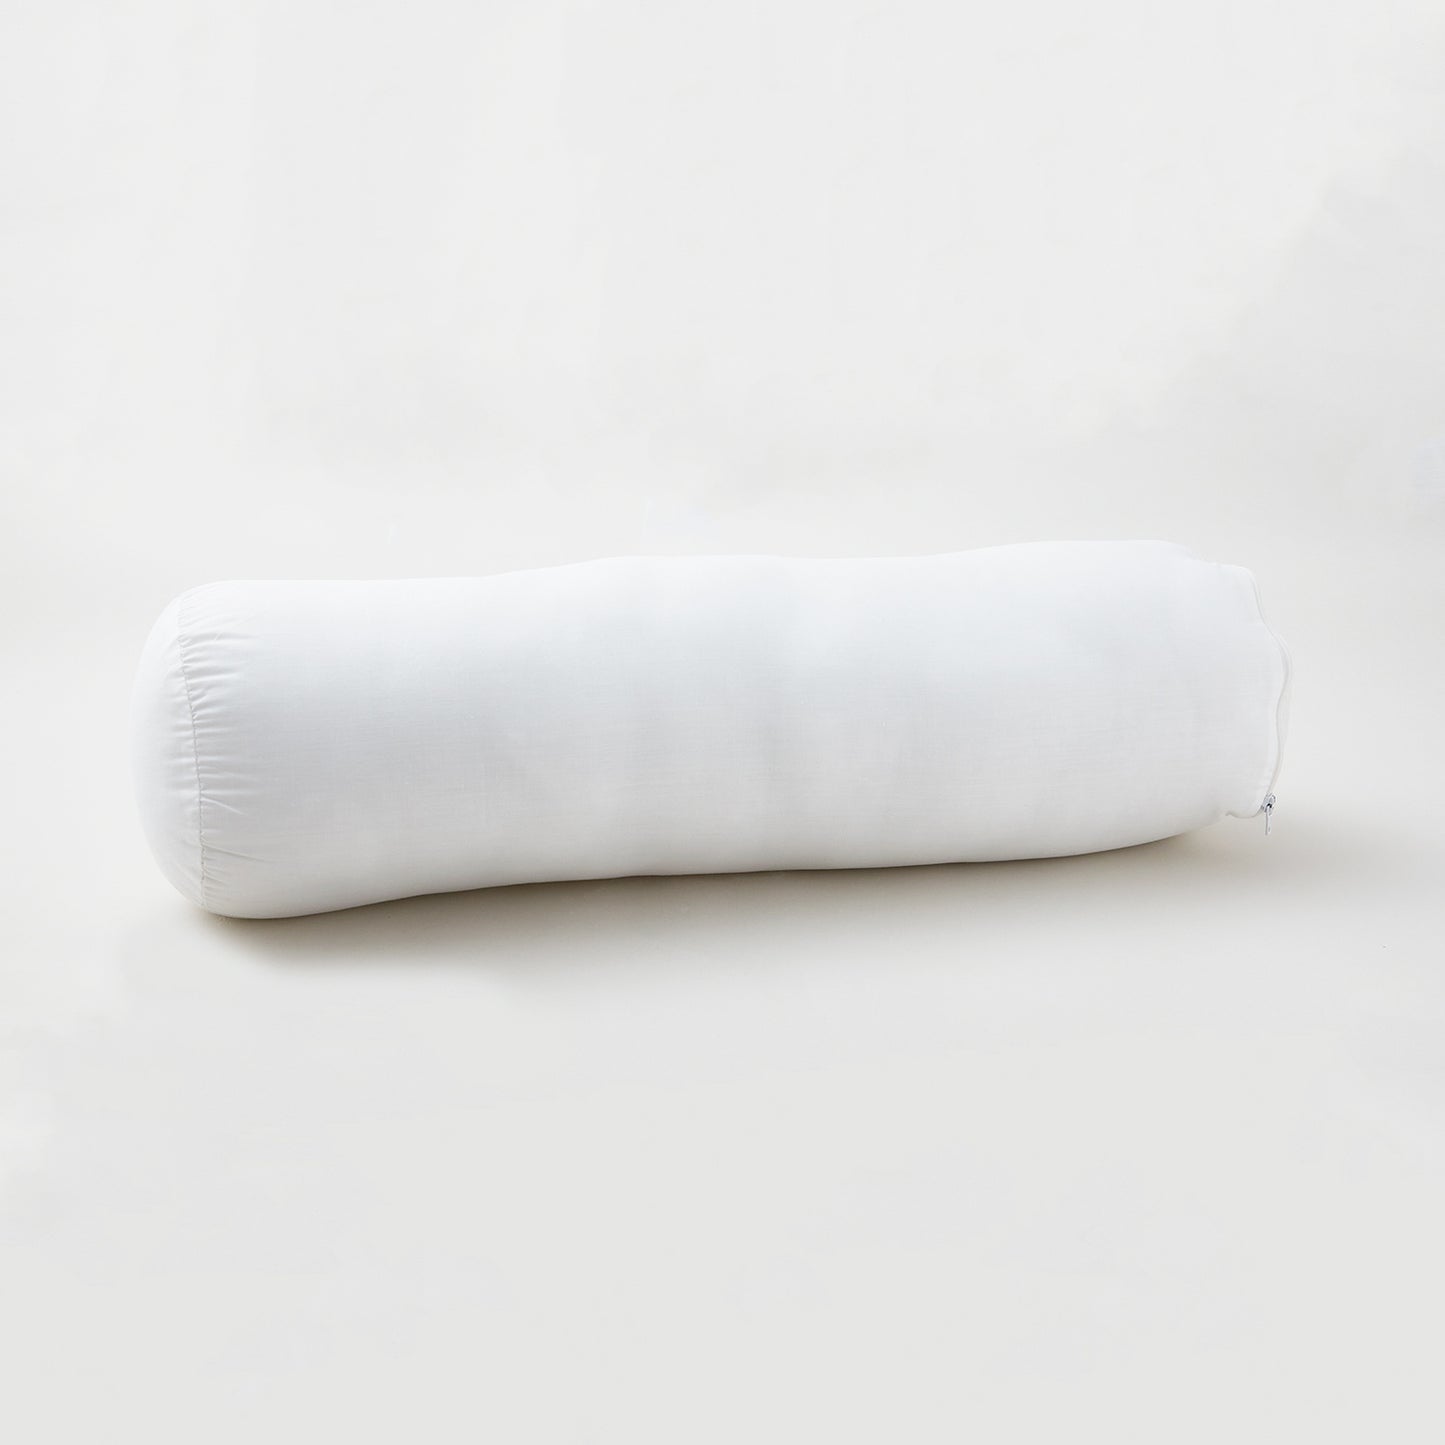 Soft Touch Neck Roll Pillow - 6" x 20" Alternative View #1